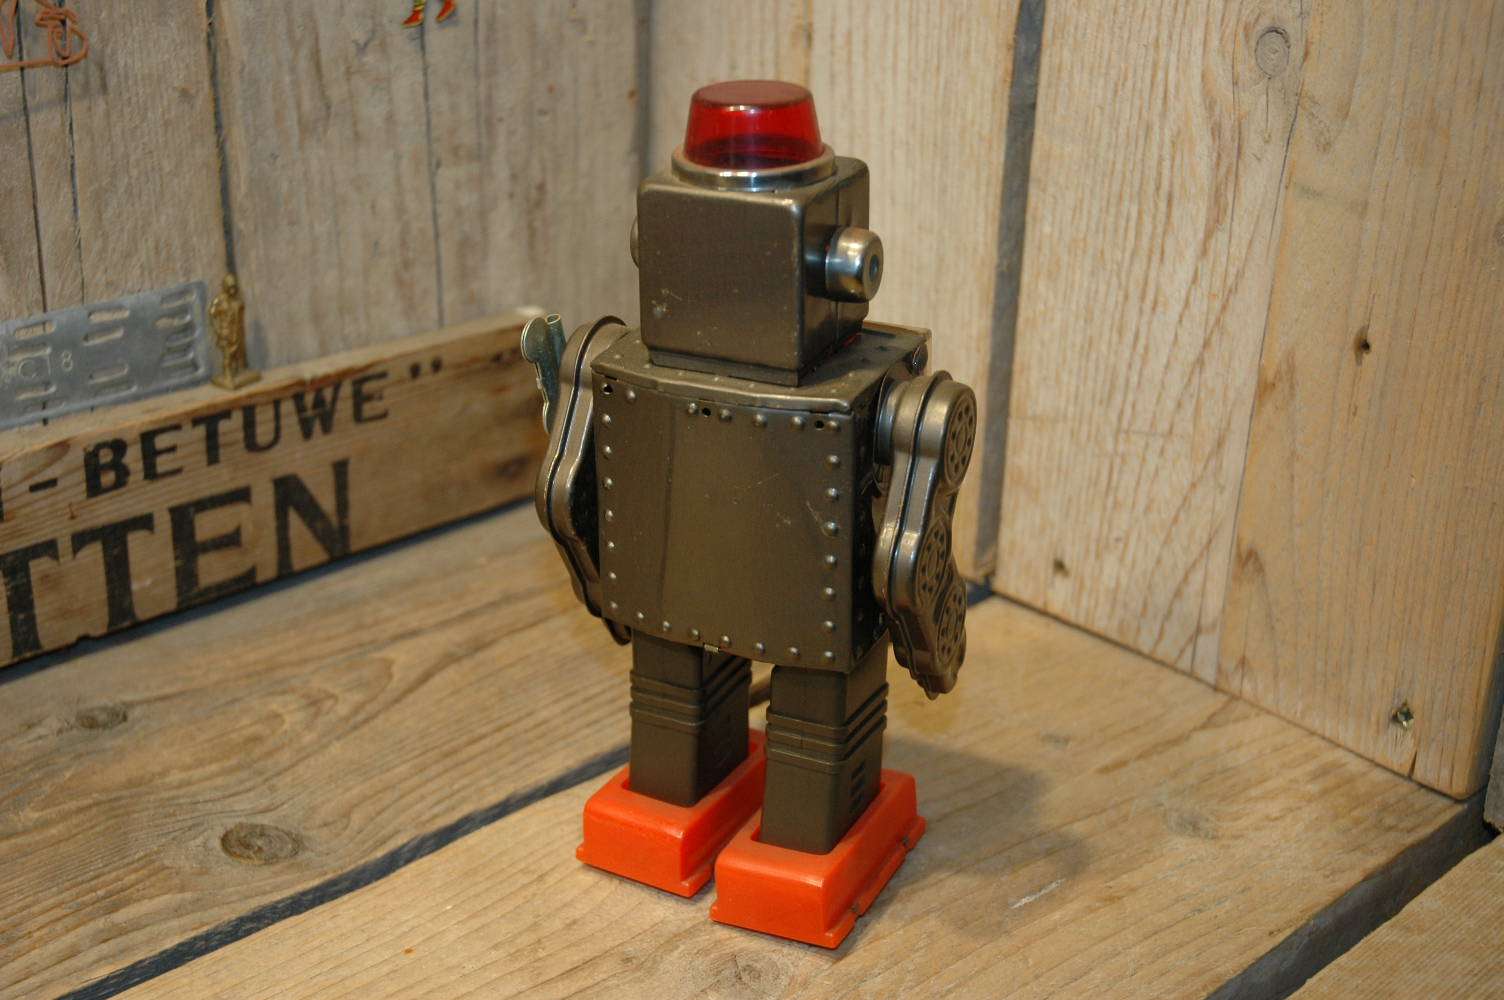 horikawa - Gear Robot with visible gears mechanism